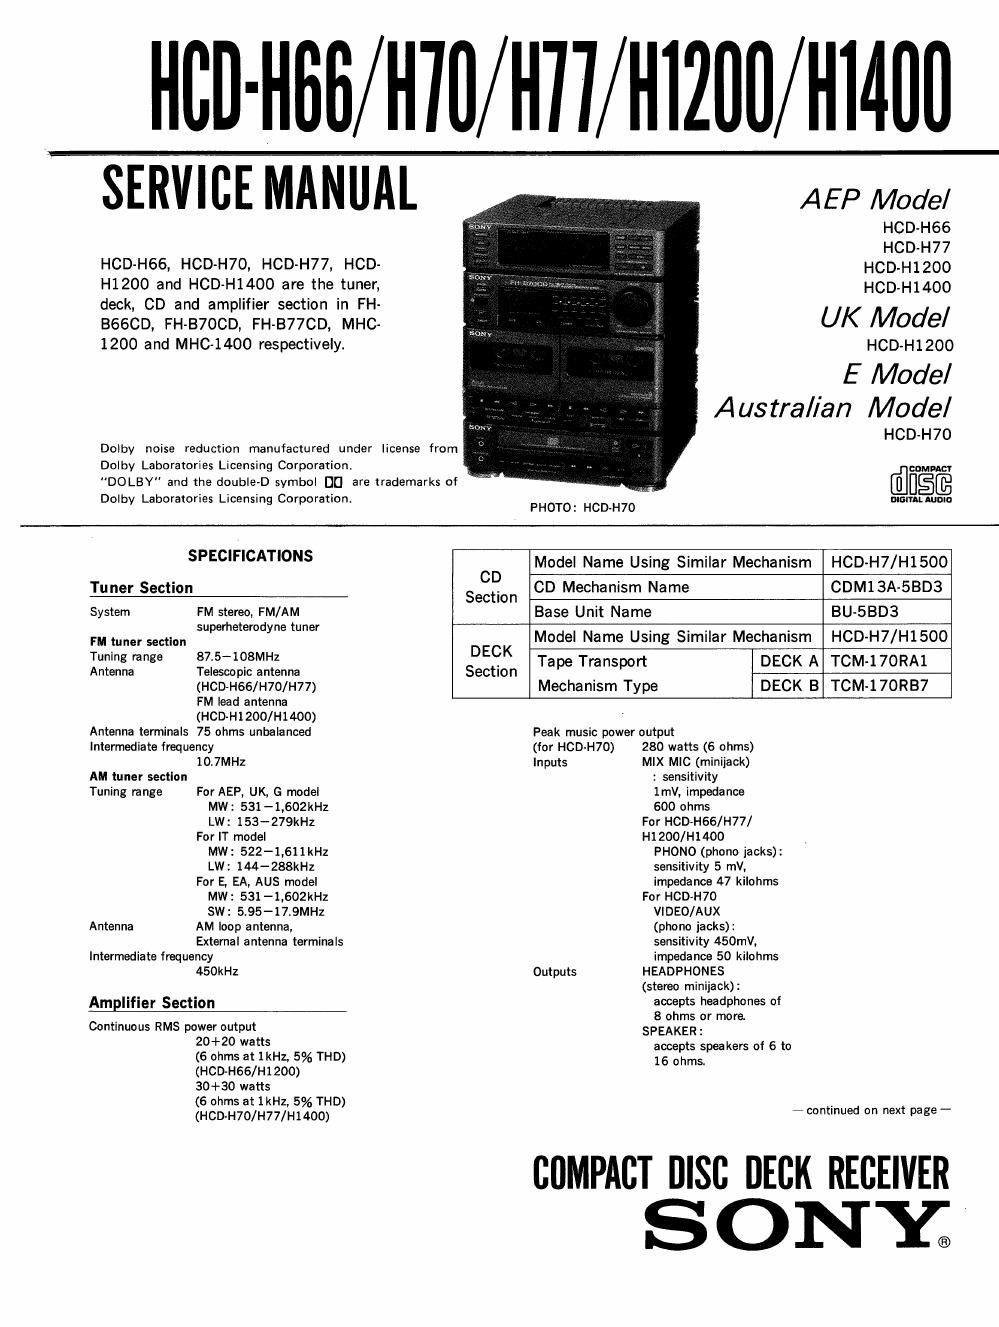 sony hcd h 66 service manual